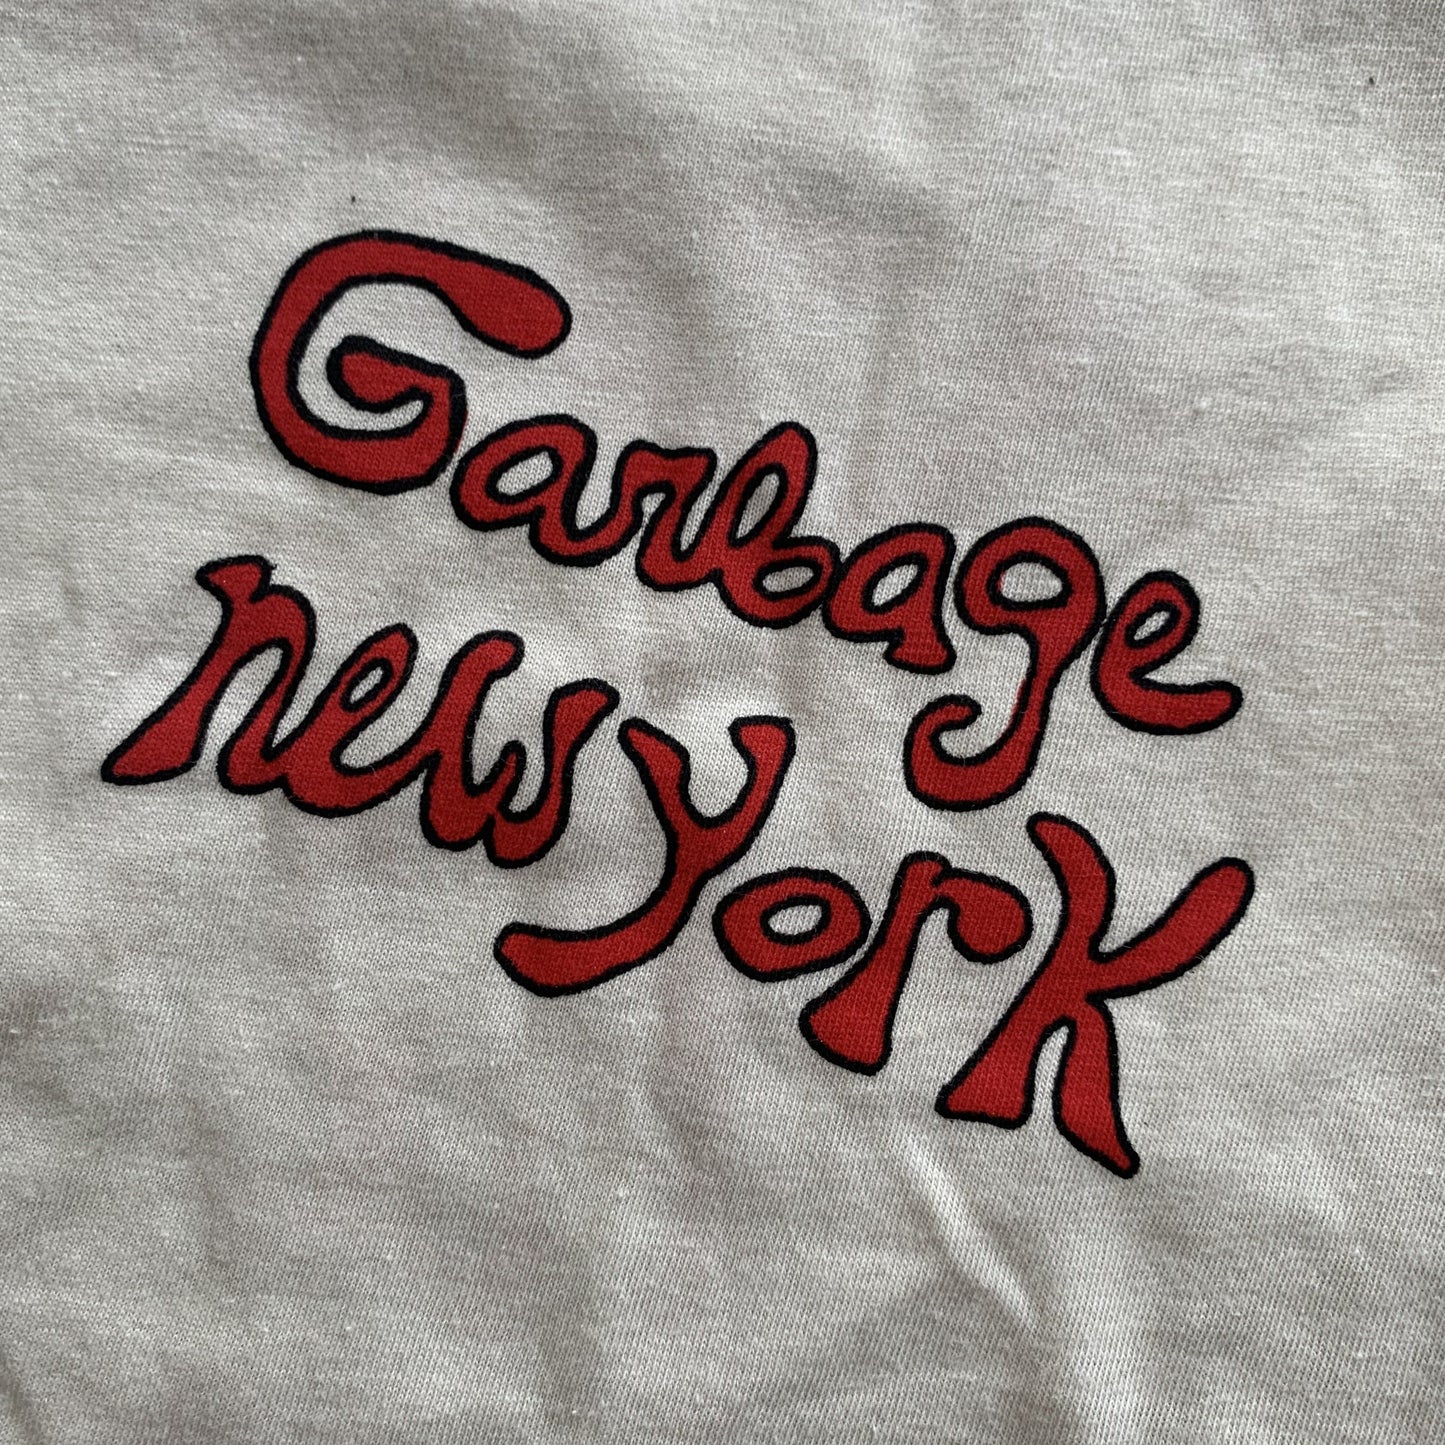 Garbage NY Tee Shirt